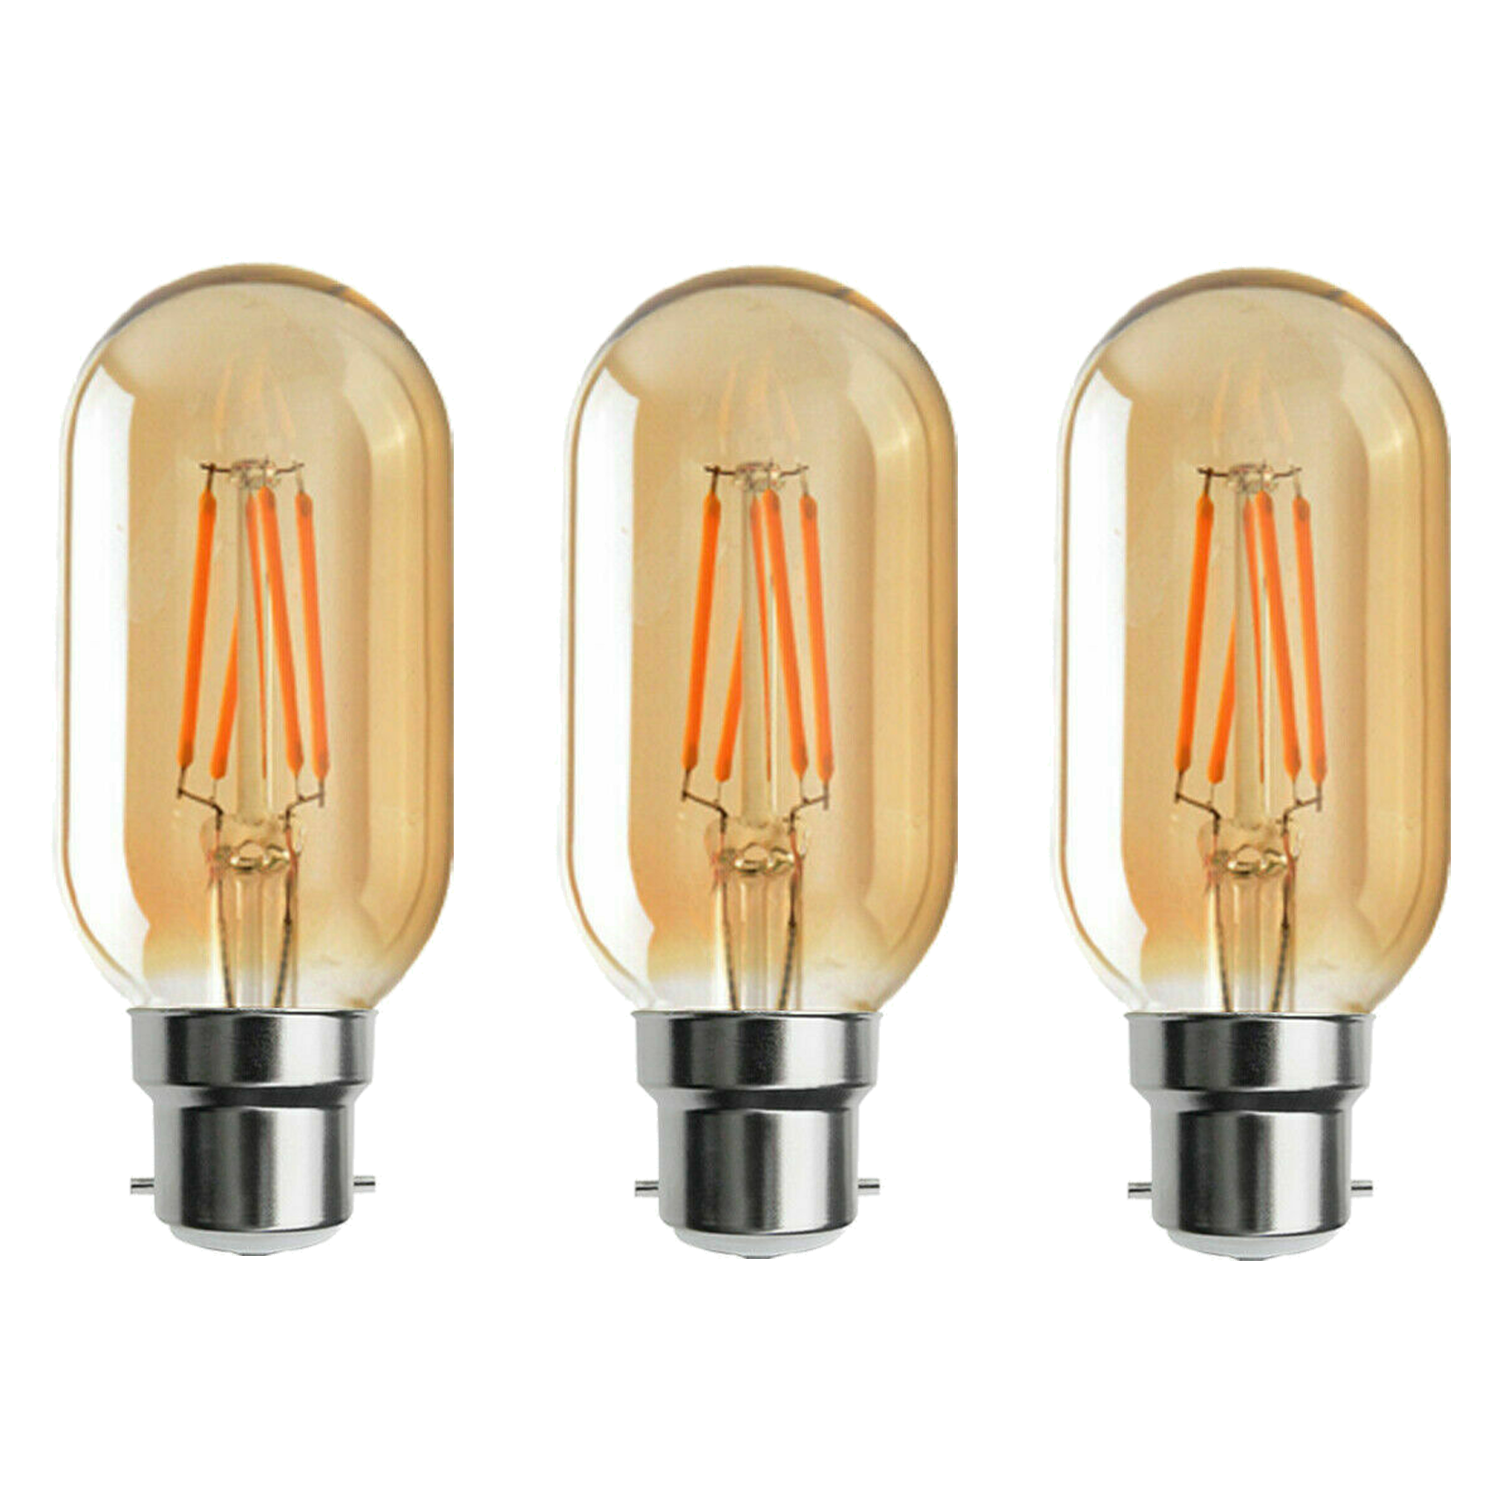 LED Filament Light Bulb - 3 pack